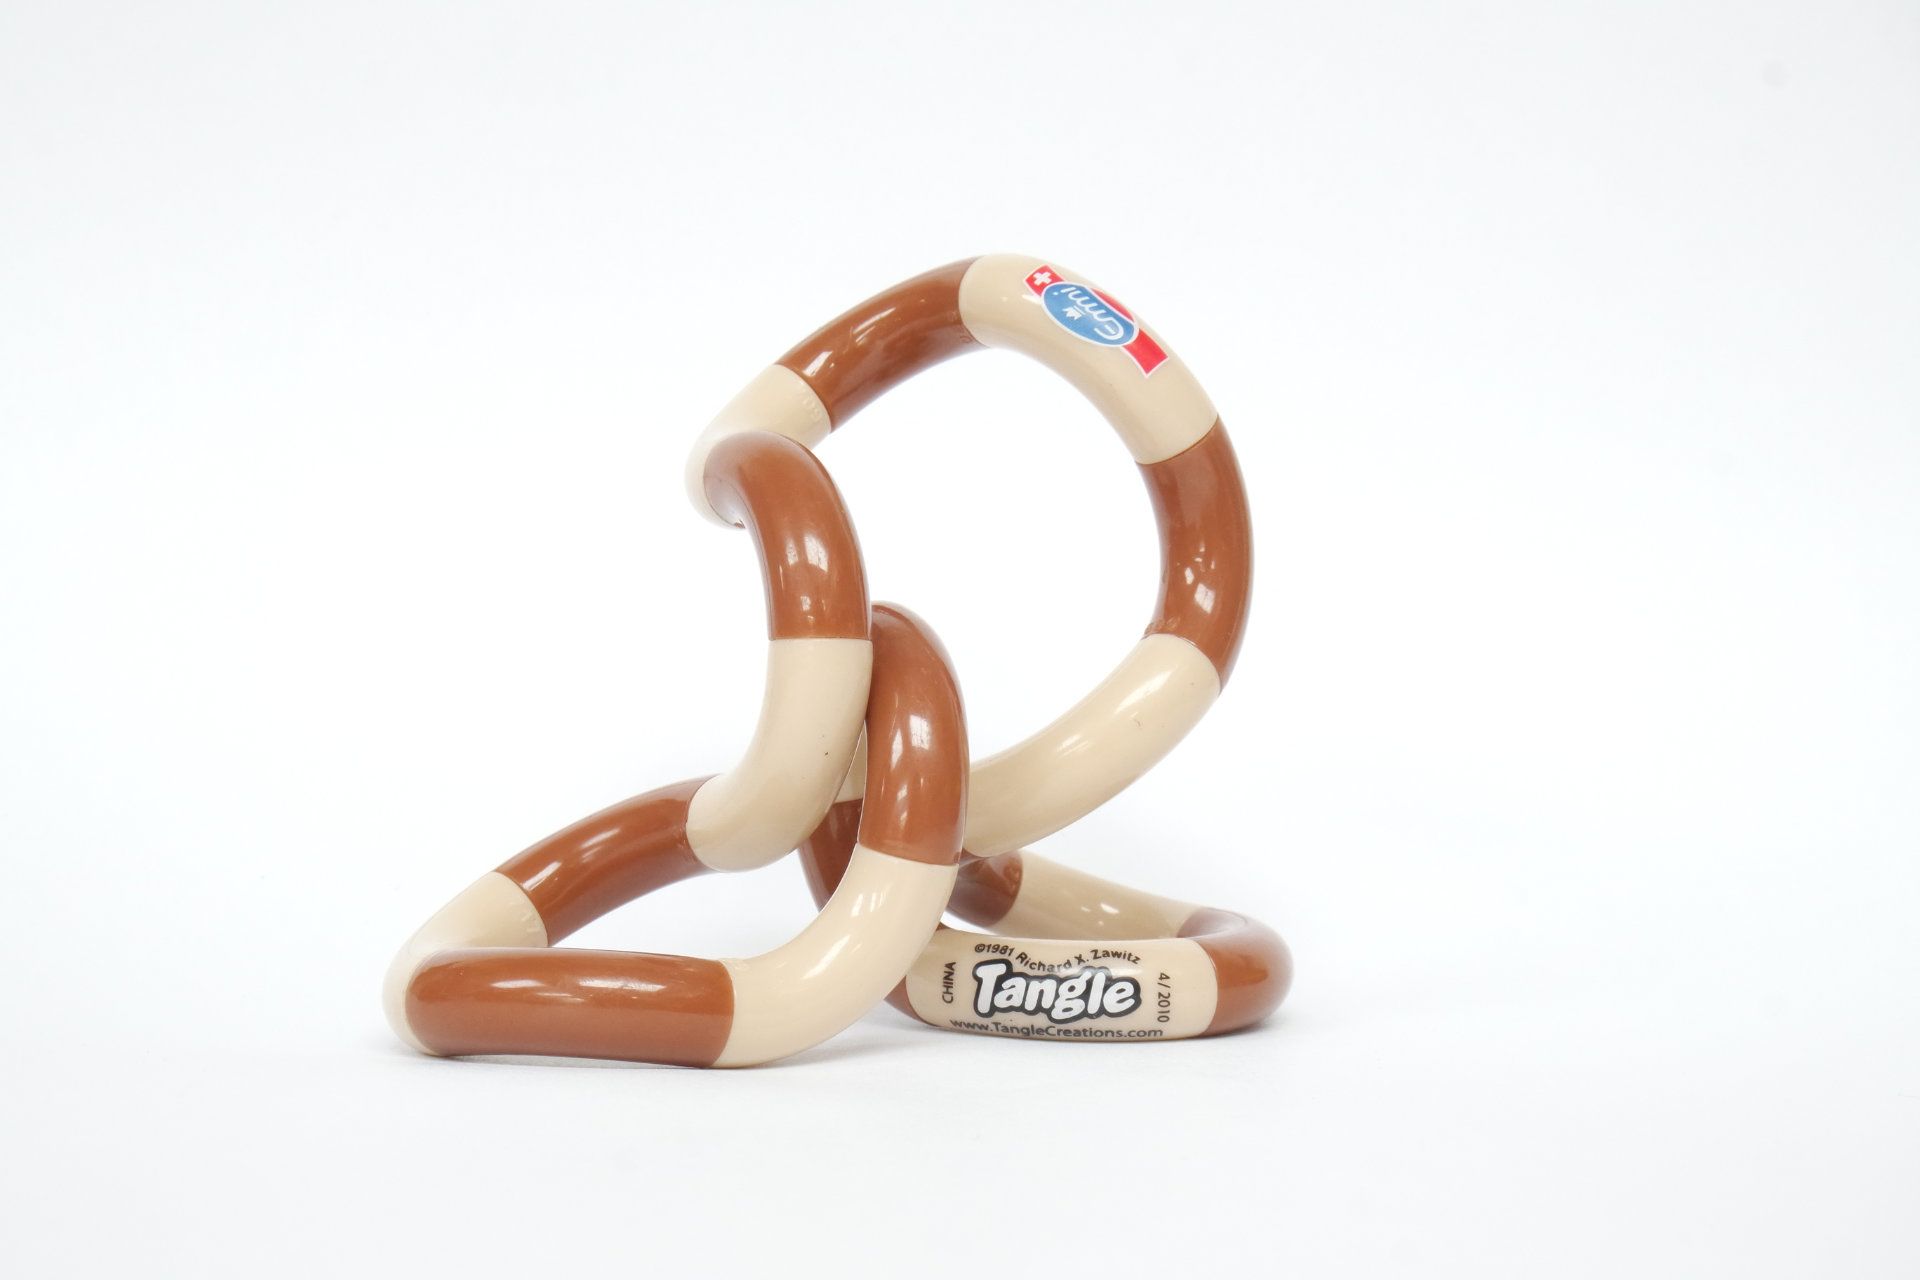 Tangle<sup>®</sup> - Das Original Fidget Toy im Einsatz